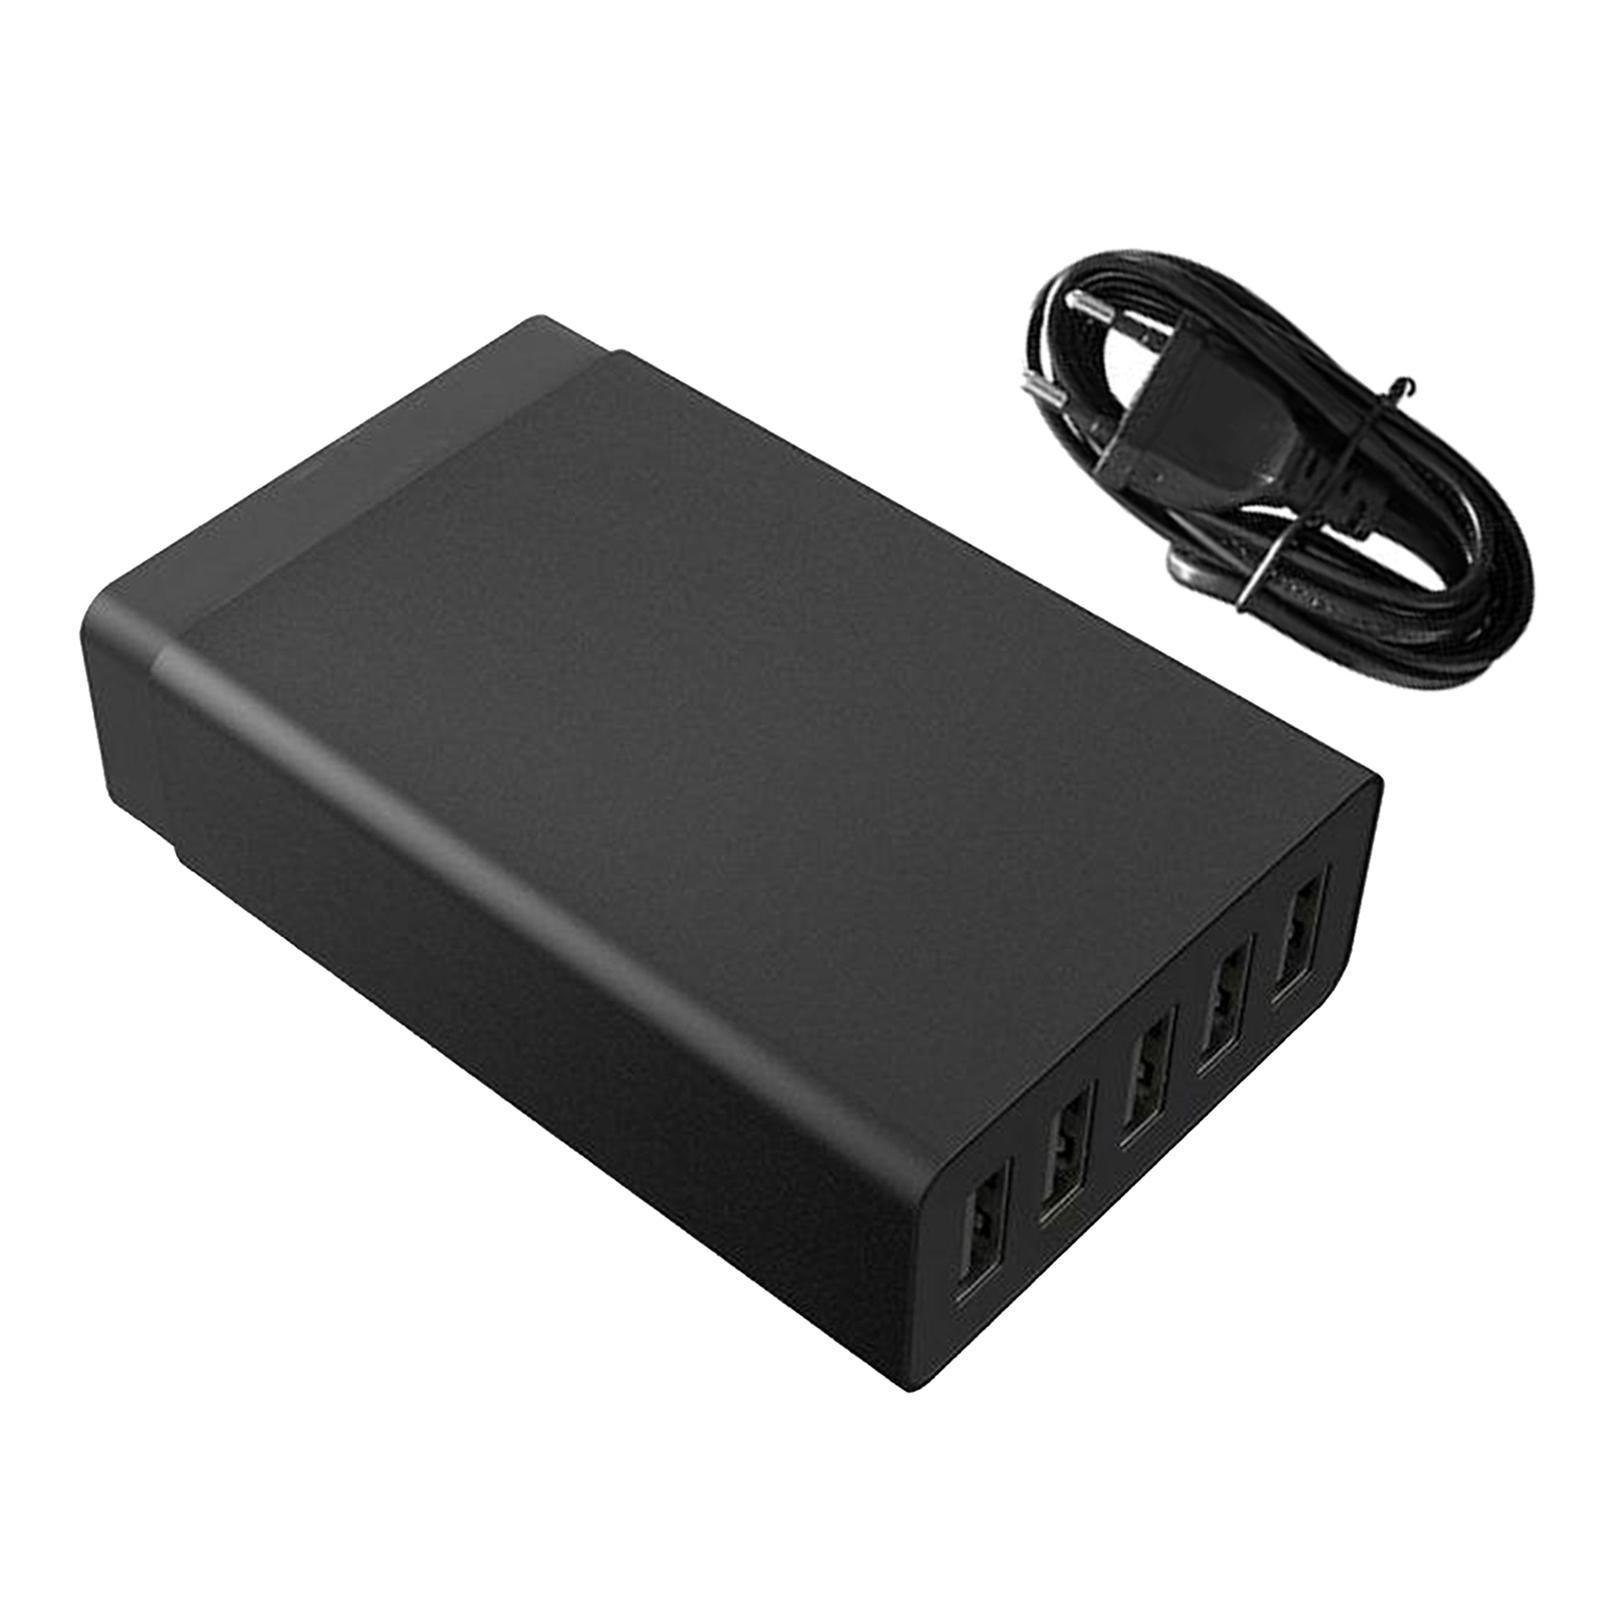 Safe Desktop Travel 6 USB Ports Charger Power Adapter Quick D Station